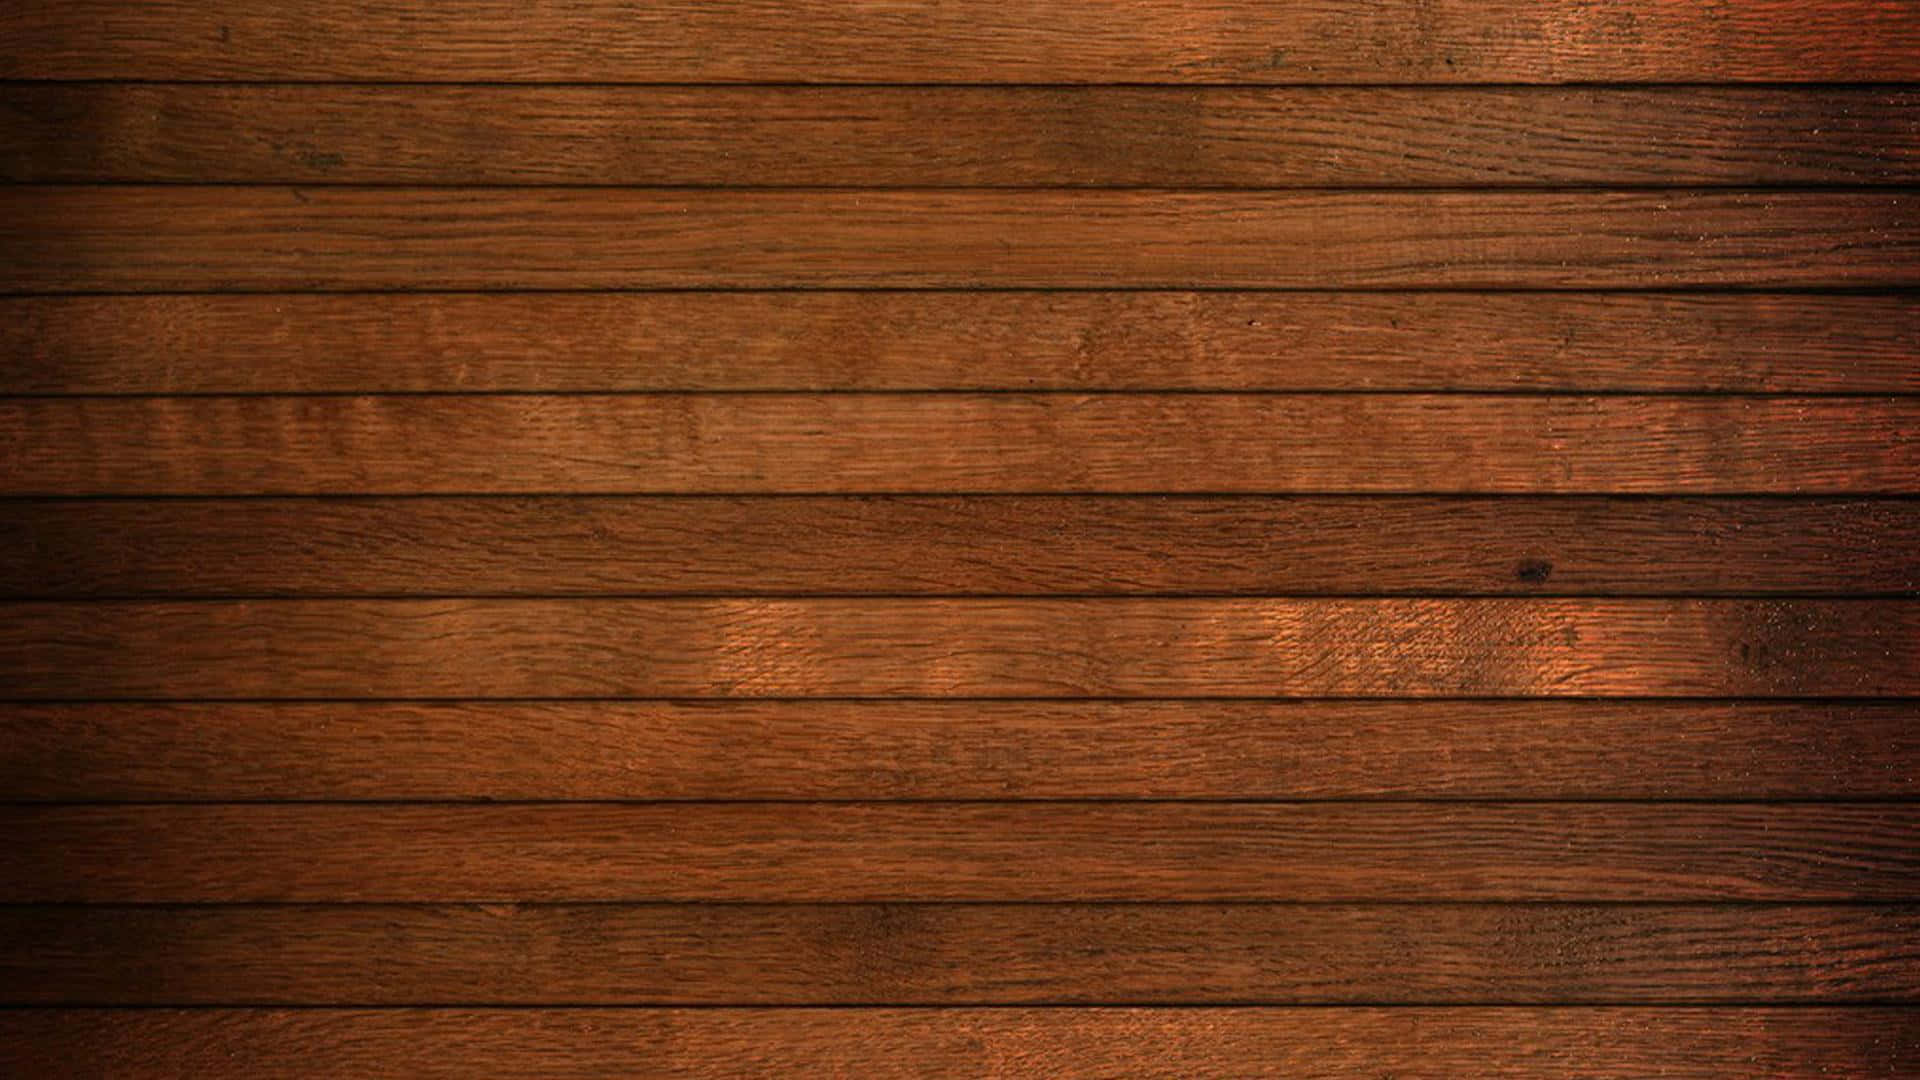 Rustic Charm of a Barn Wood Wall Wallpaper